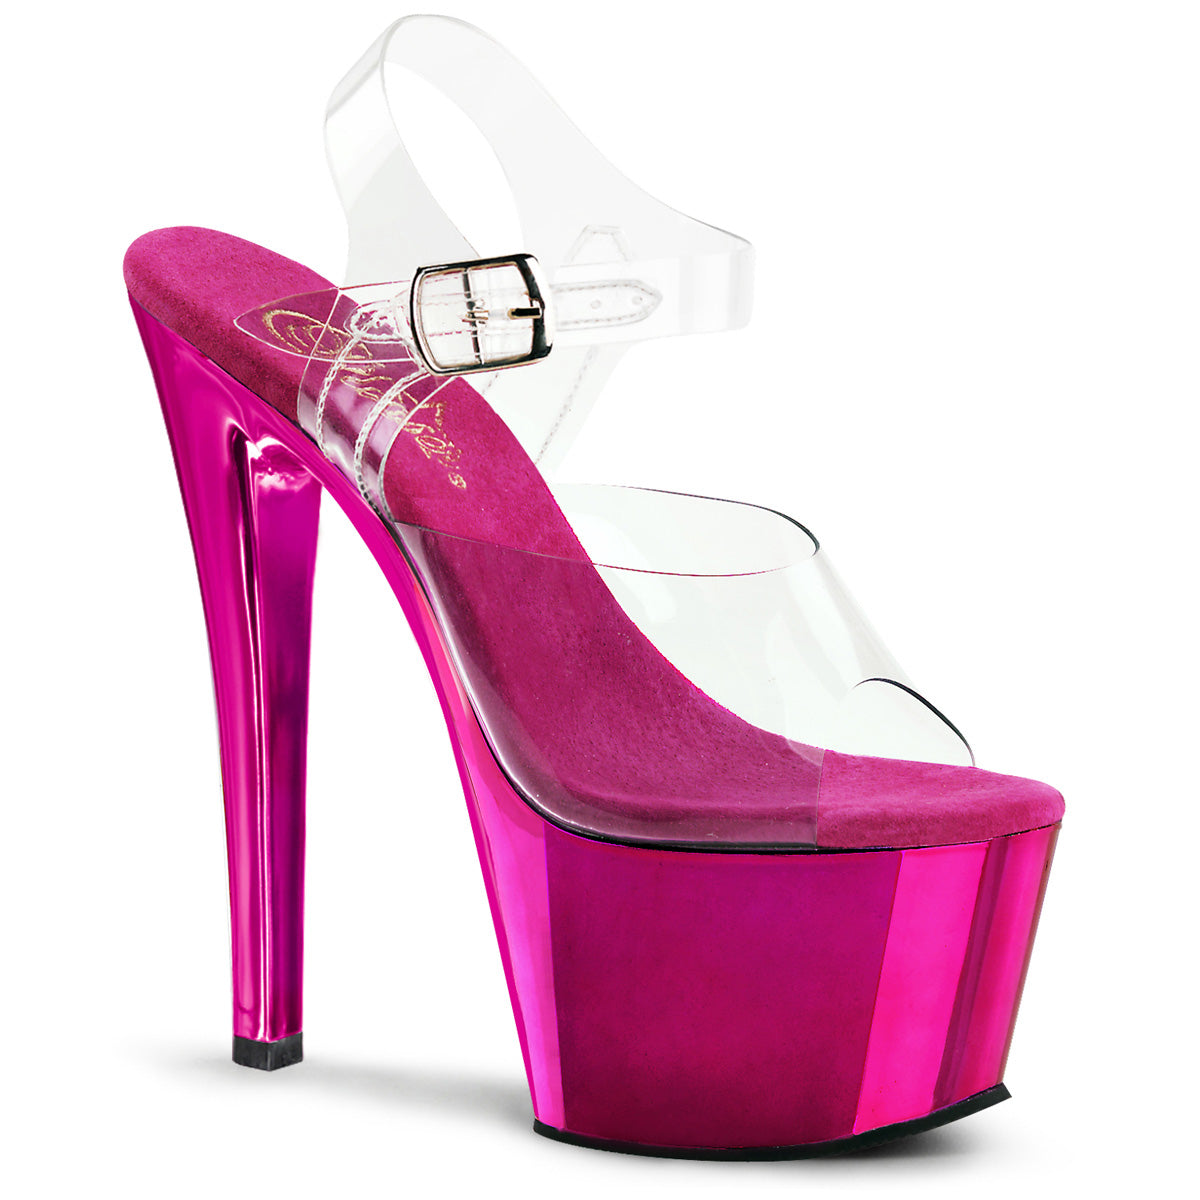 SKY-308 7" Heel Clear & Hot Pink Chrome Pole Dance Shoes